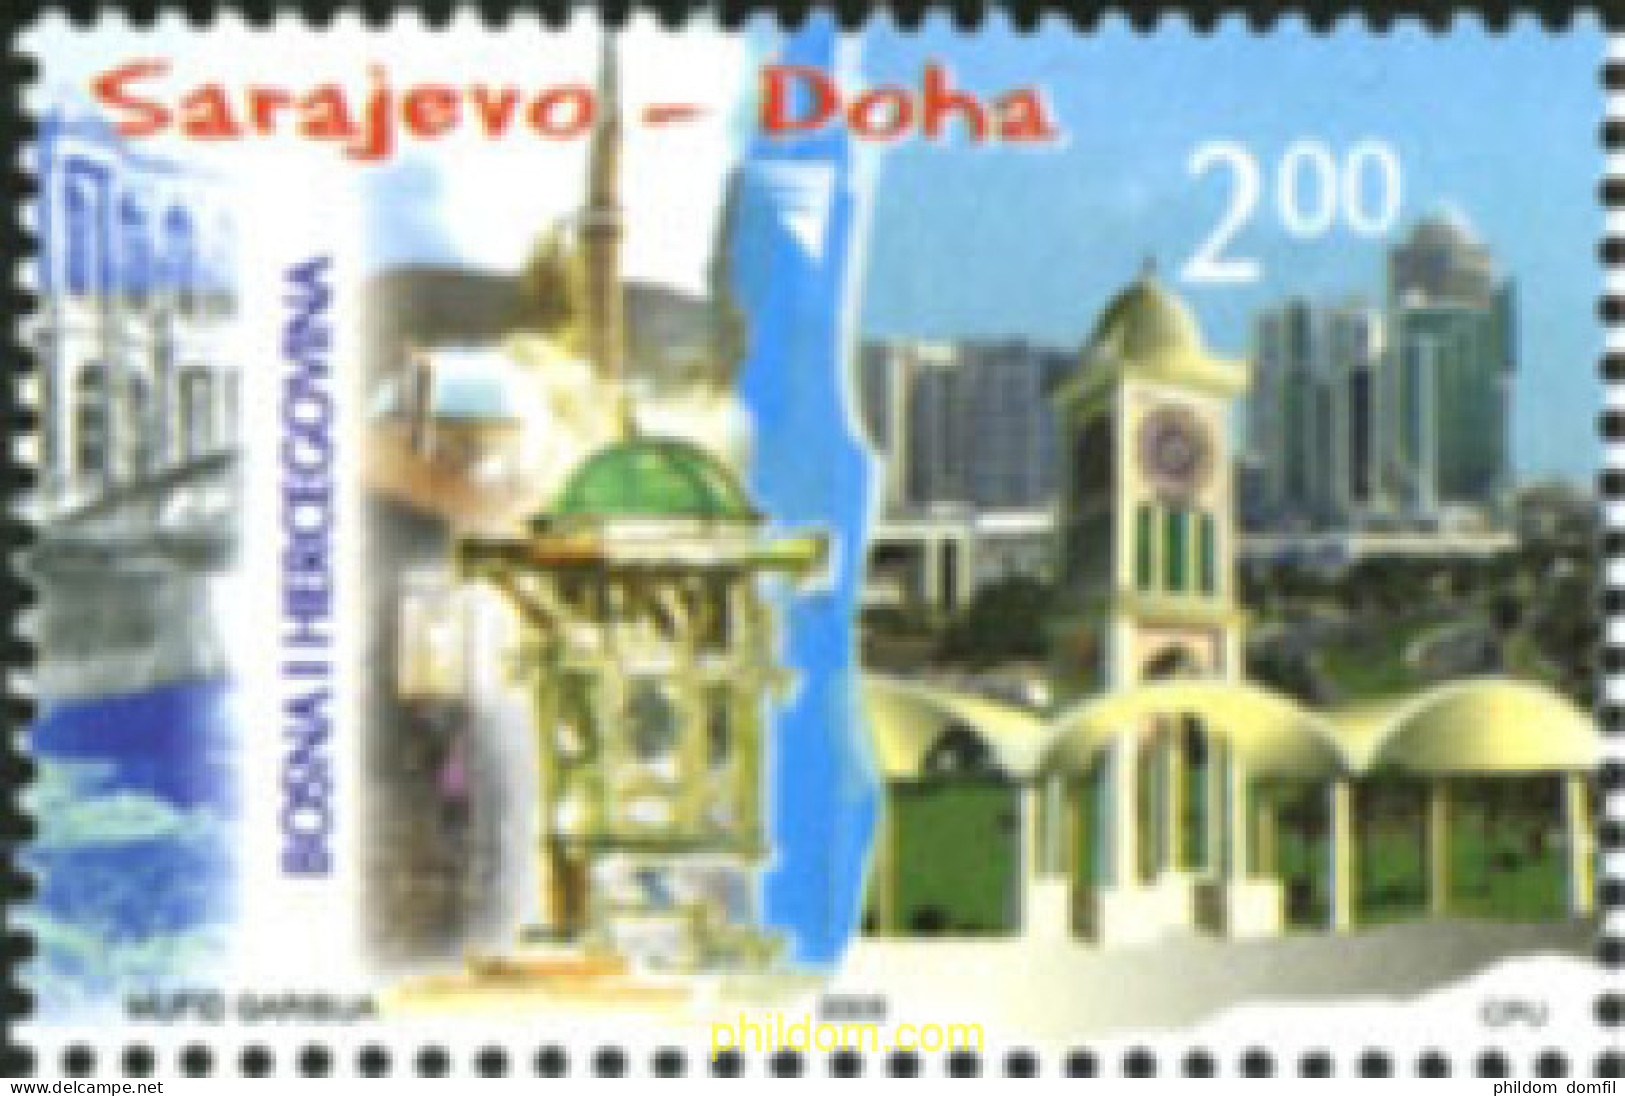 183750 MNH BOSNIA-HERZEGOVINA 2005 VILLAS DE SARAJEVO - Bosnië En Herzegovina